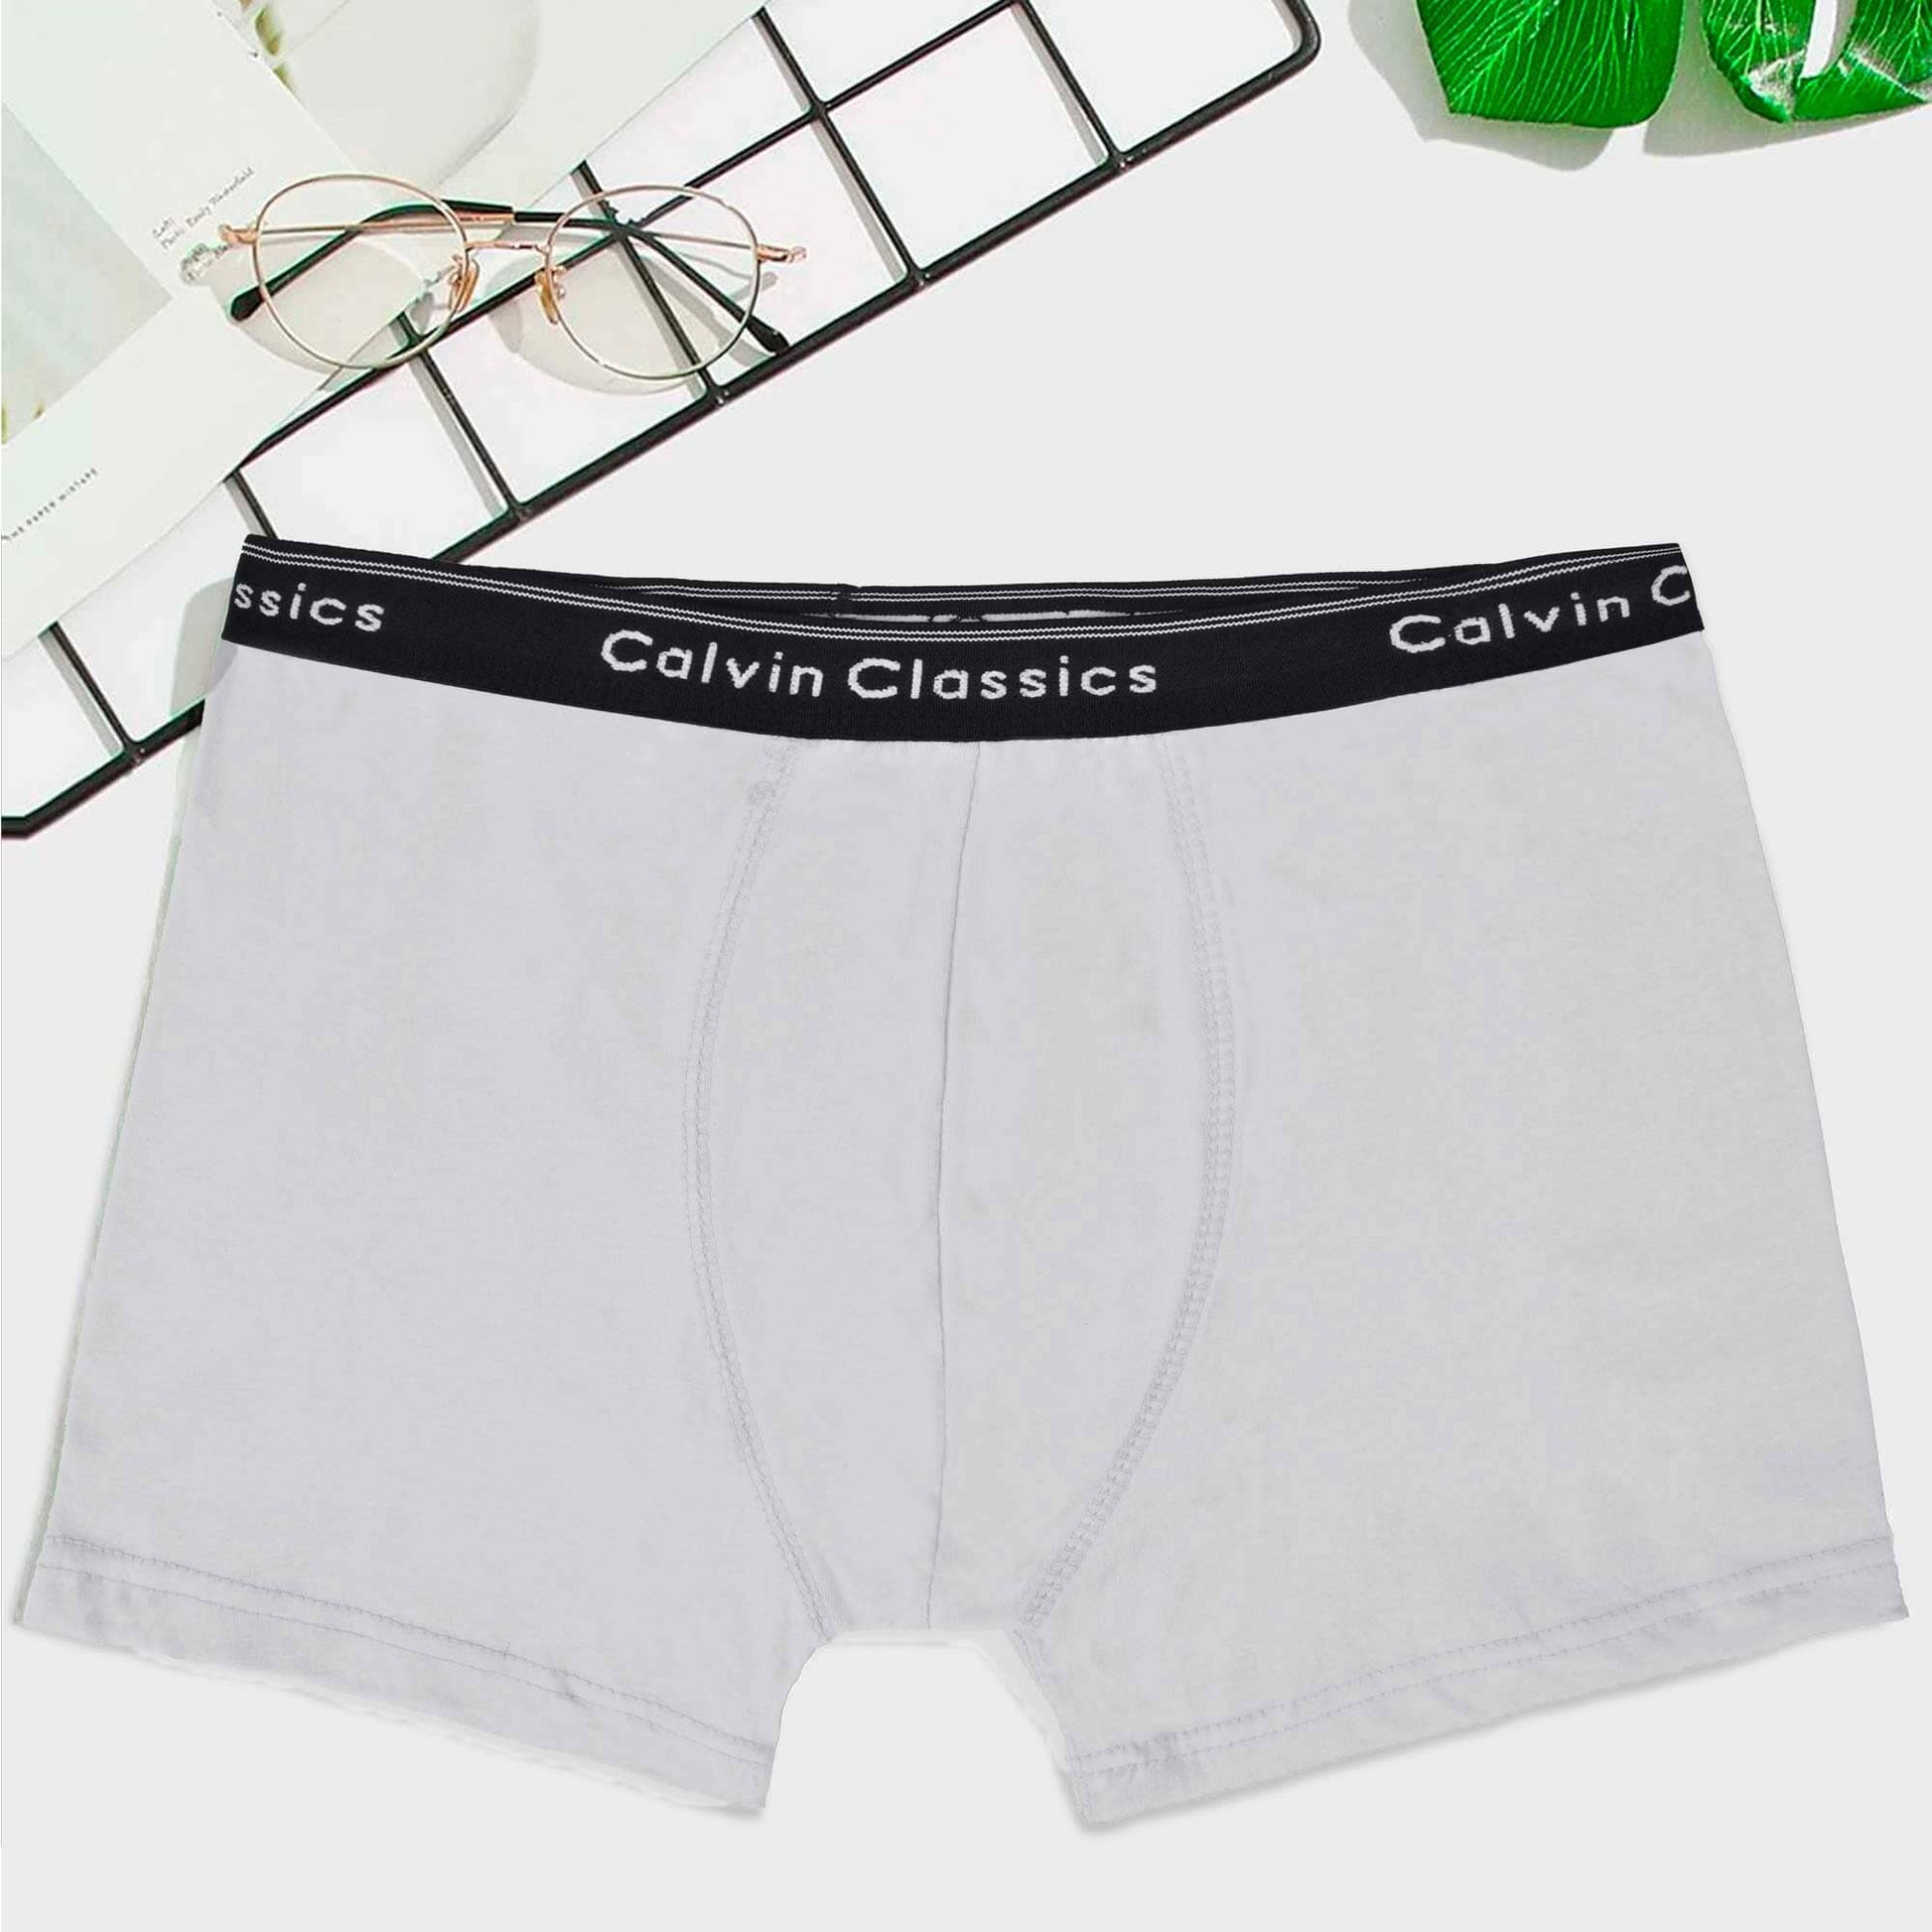 Calvin Classic Men's Boxer Shorts Men's Underwear SZK Light Grey S 